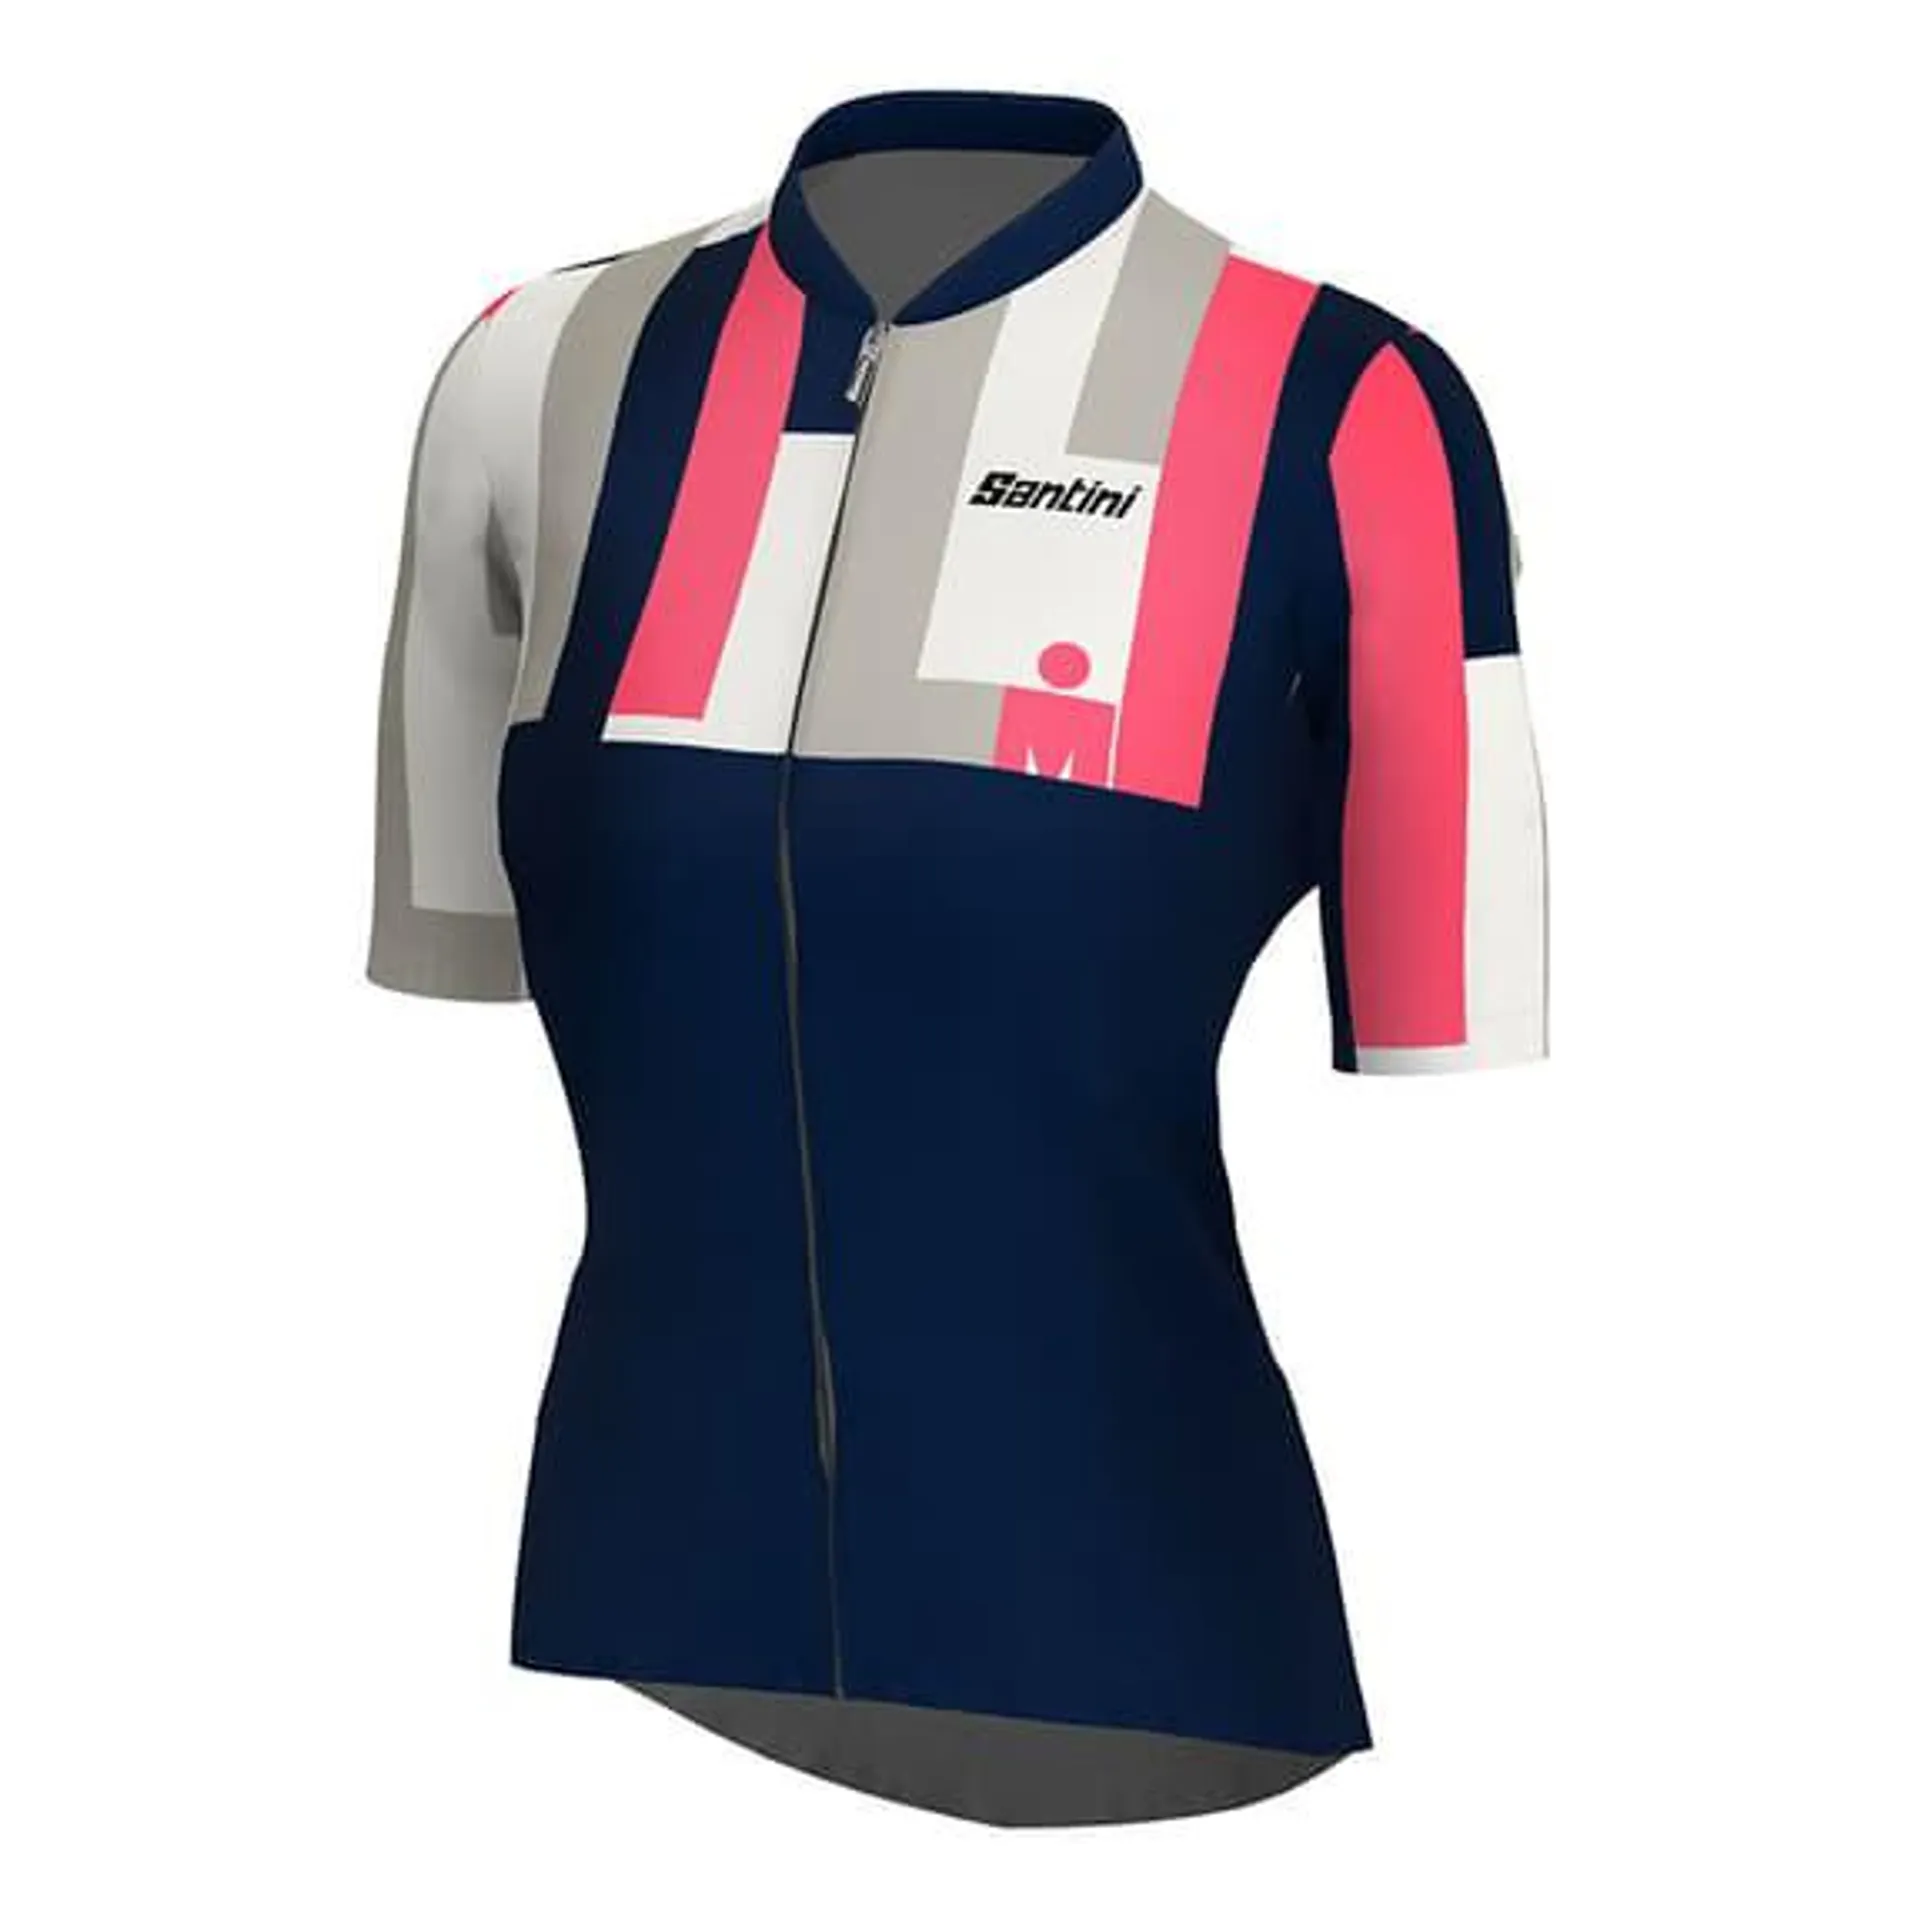 Maillot Santini x Ironman Aahonoui manche courte bleu marine blanc rose femme - Coupe Slim